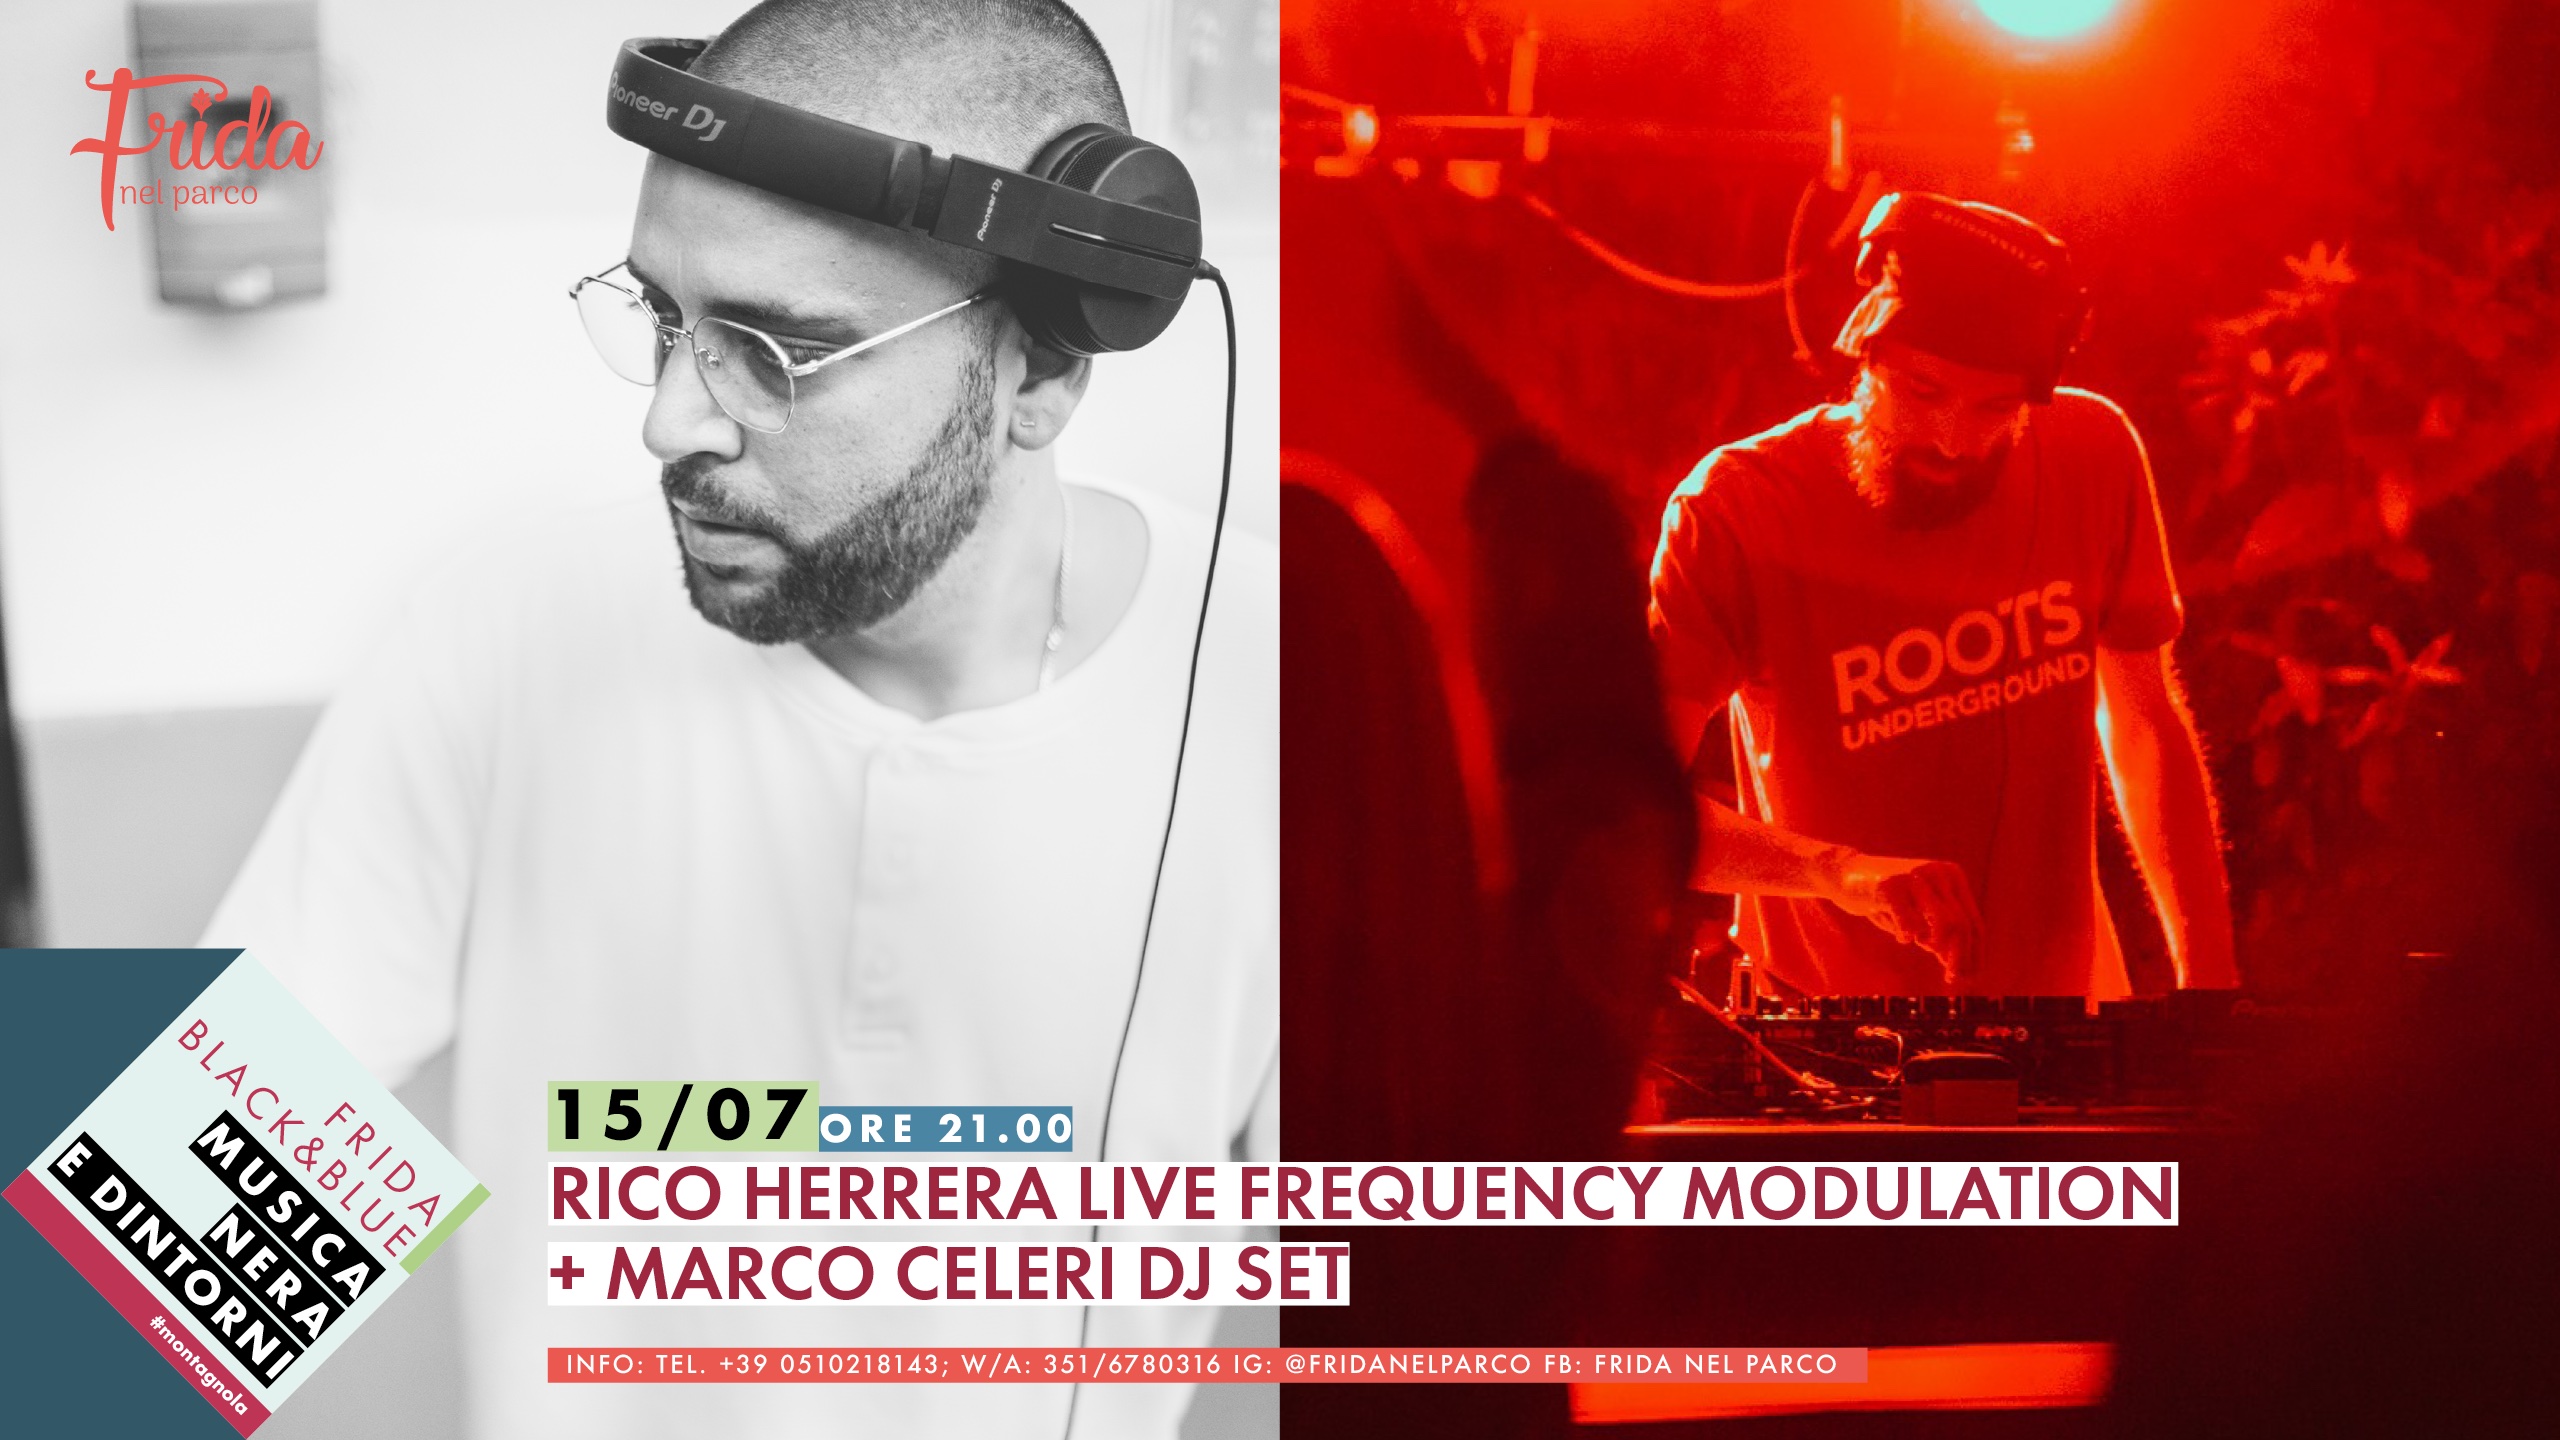 Rico Herrera live frequency modulation + Marco Celeri dj set.